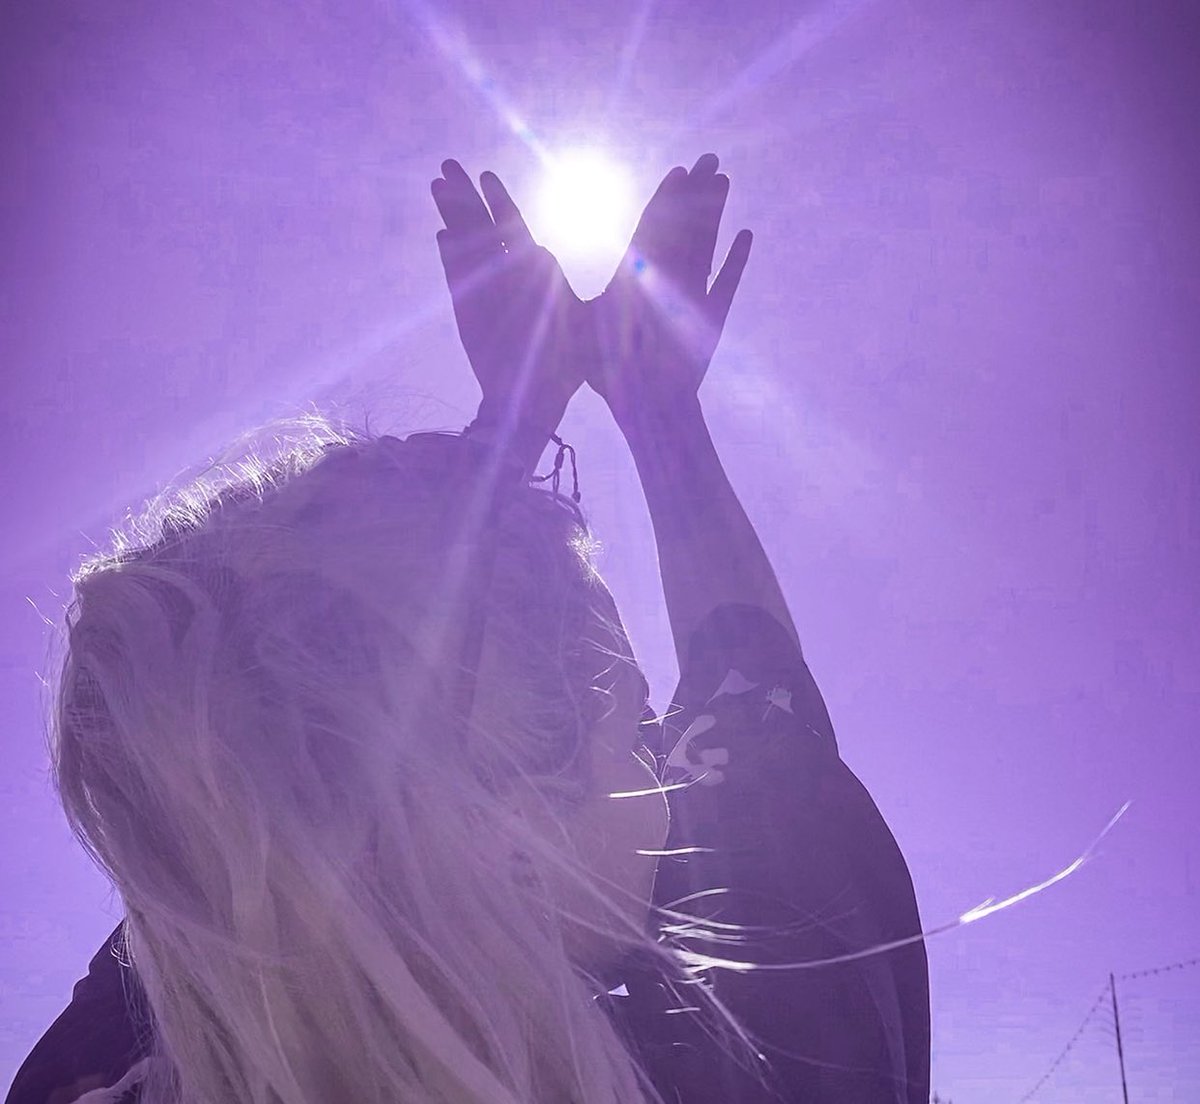 Praise The Sun ☀️ 

.
#purpleaesthetic #sunshine #blondehair #purpleinstagram #beach #indiefolklondon #happiness #singersongwriter #music #singerslife #love #iphonography #unsignedartist #skyporn #pintrestinspired #following #summervibes #like #girl #peace